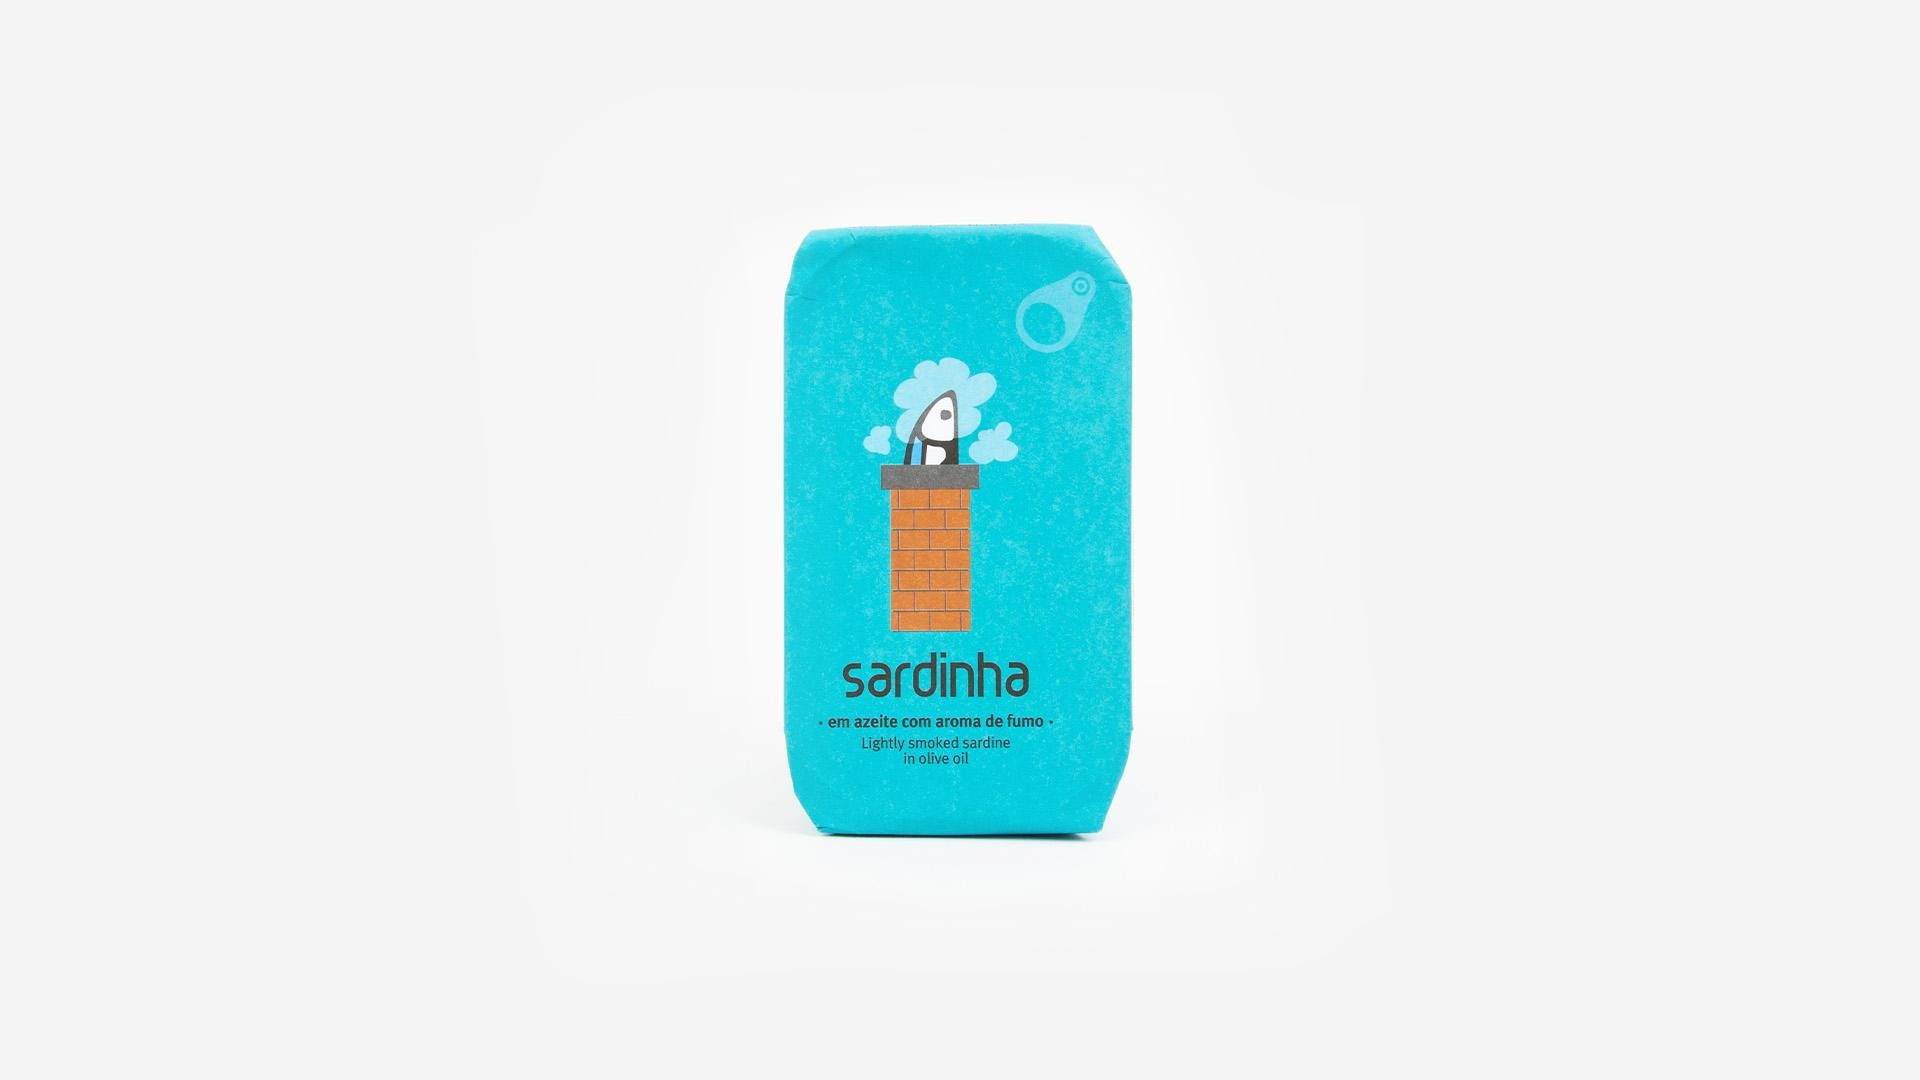 Sardinha Sardines in Smoked Olive Oil